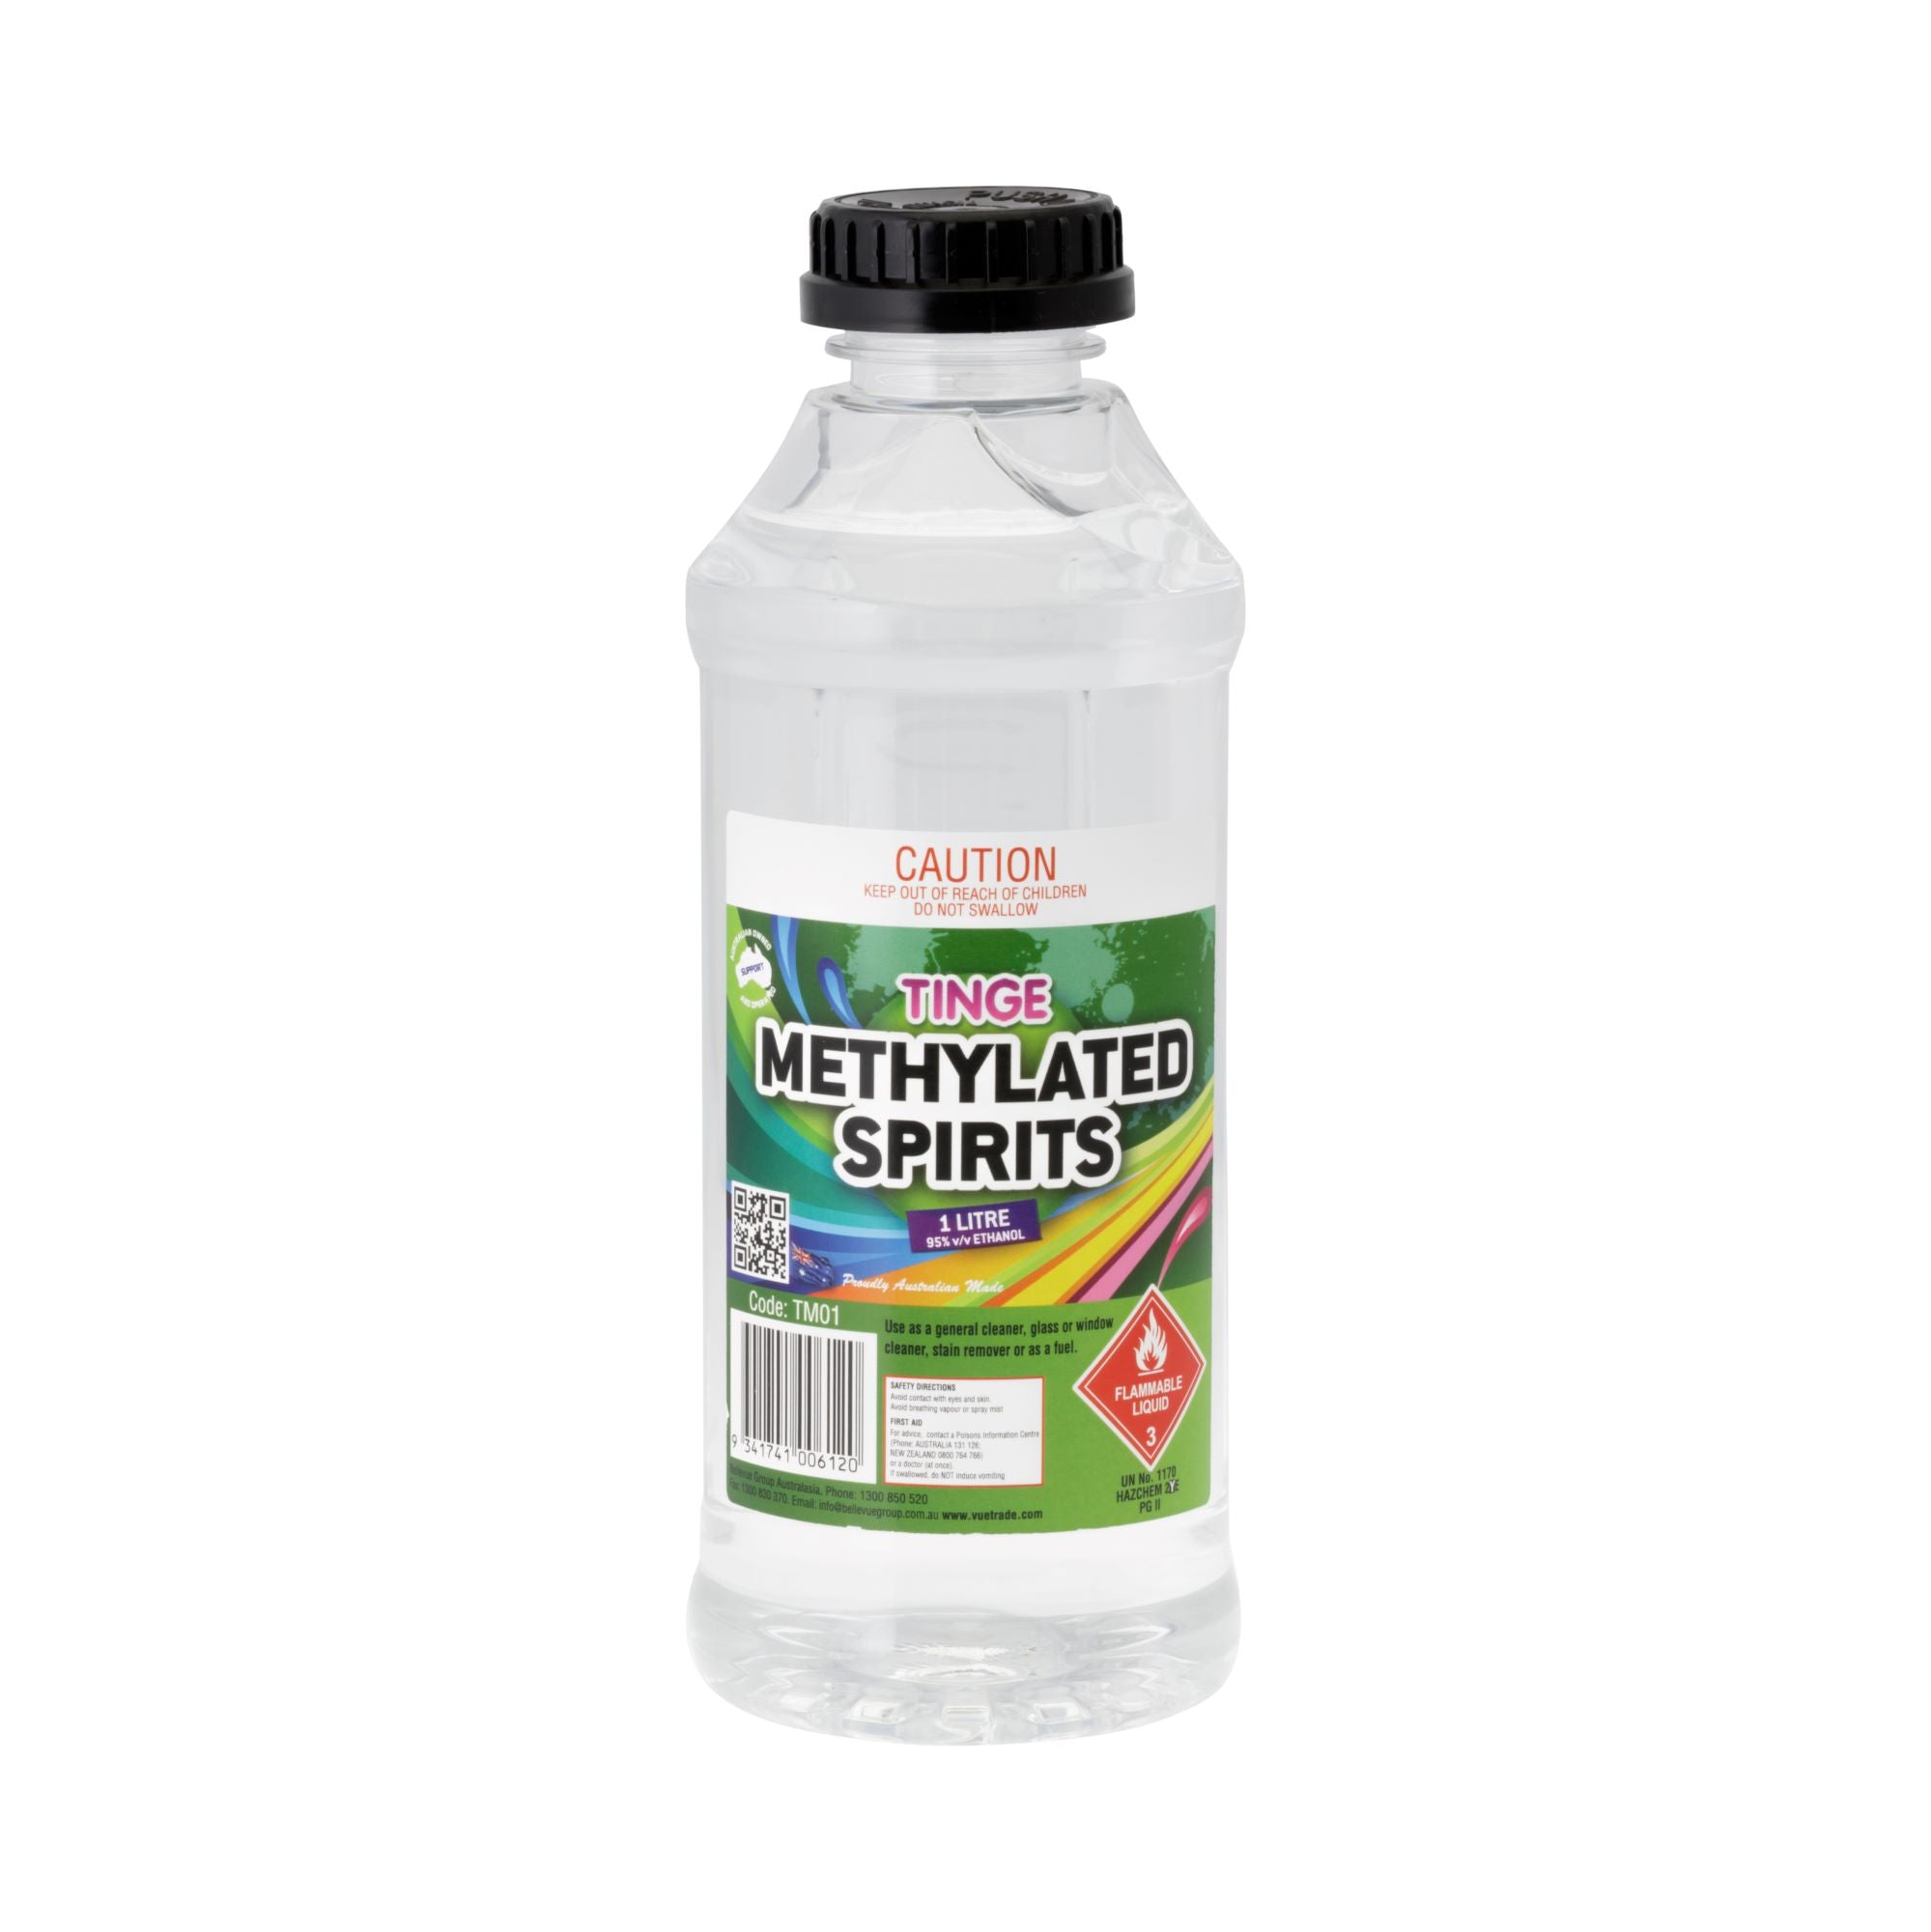 Tinge Methylated Spirits 1L